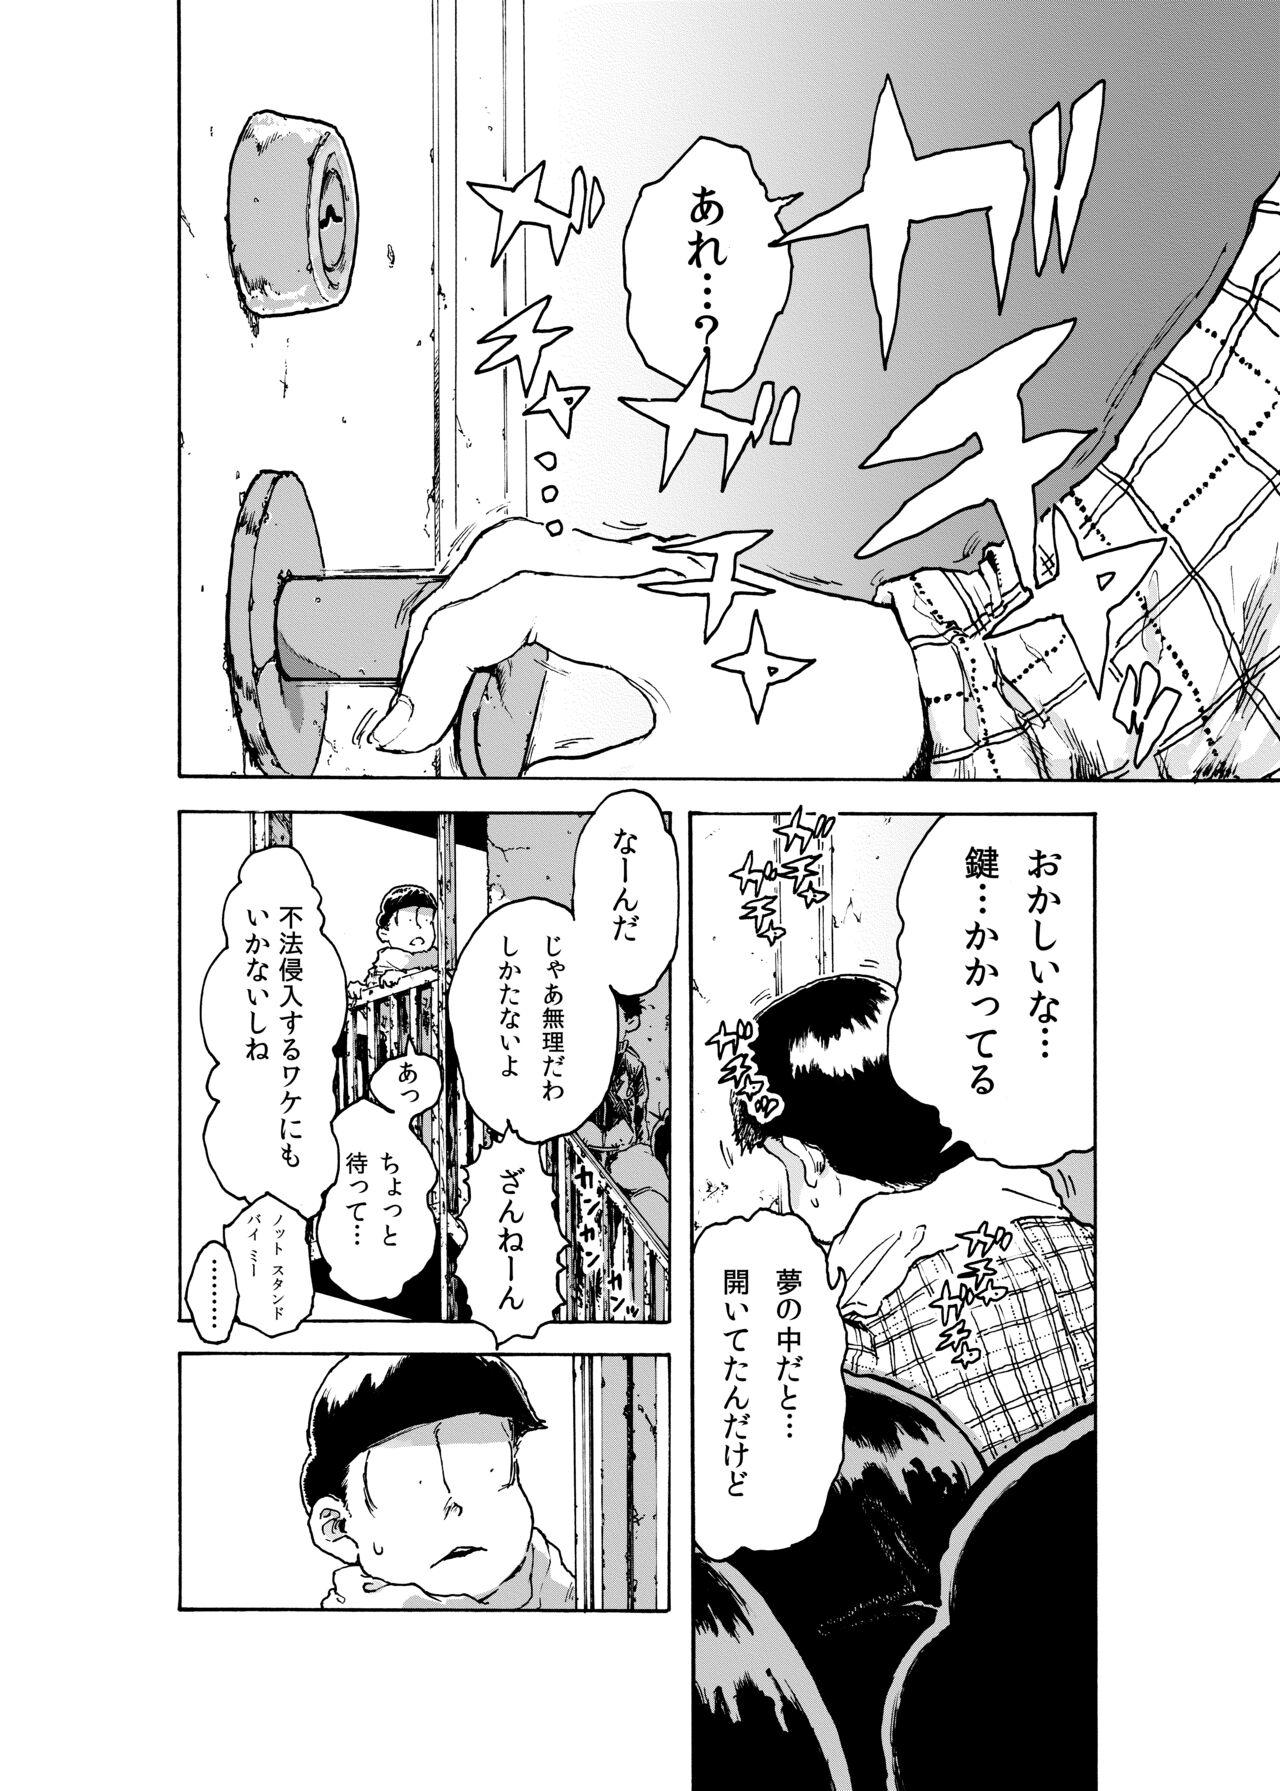 Urine WEB Sairoku 'BUT WHO IS THE DREAMRE?' - Osomatsu san Clitoris - Page 2